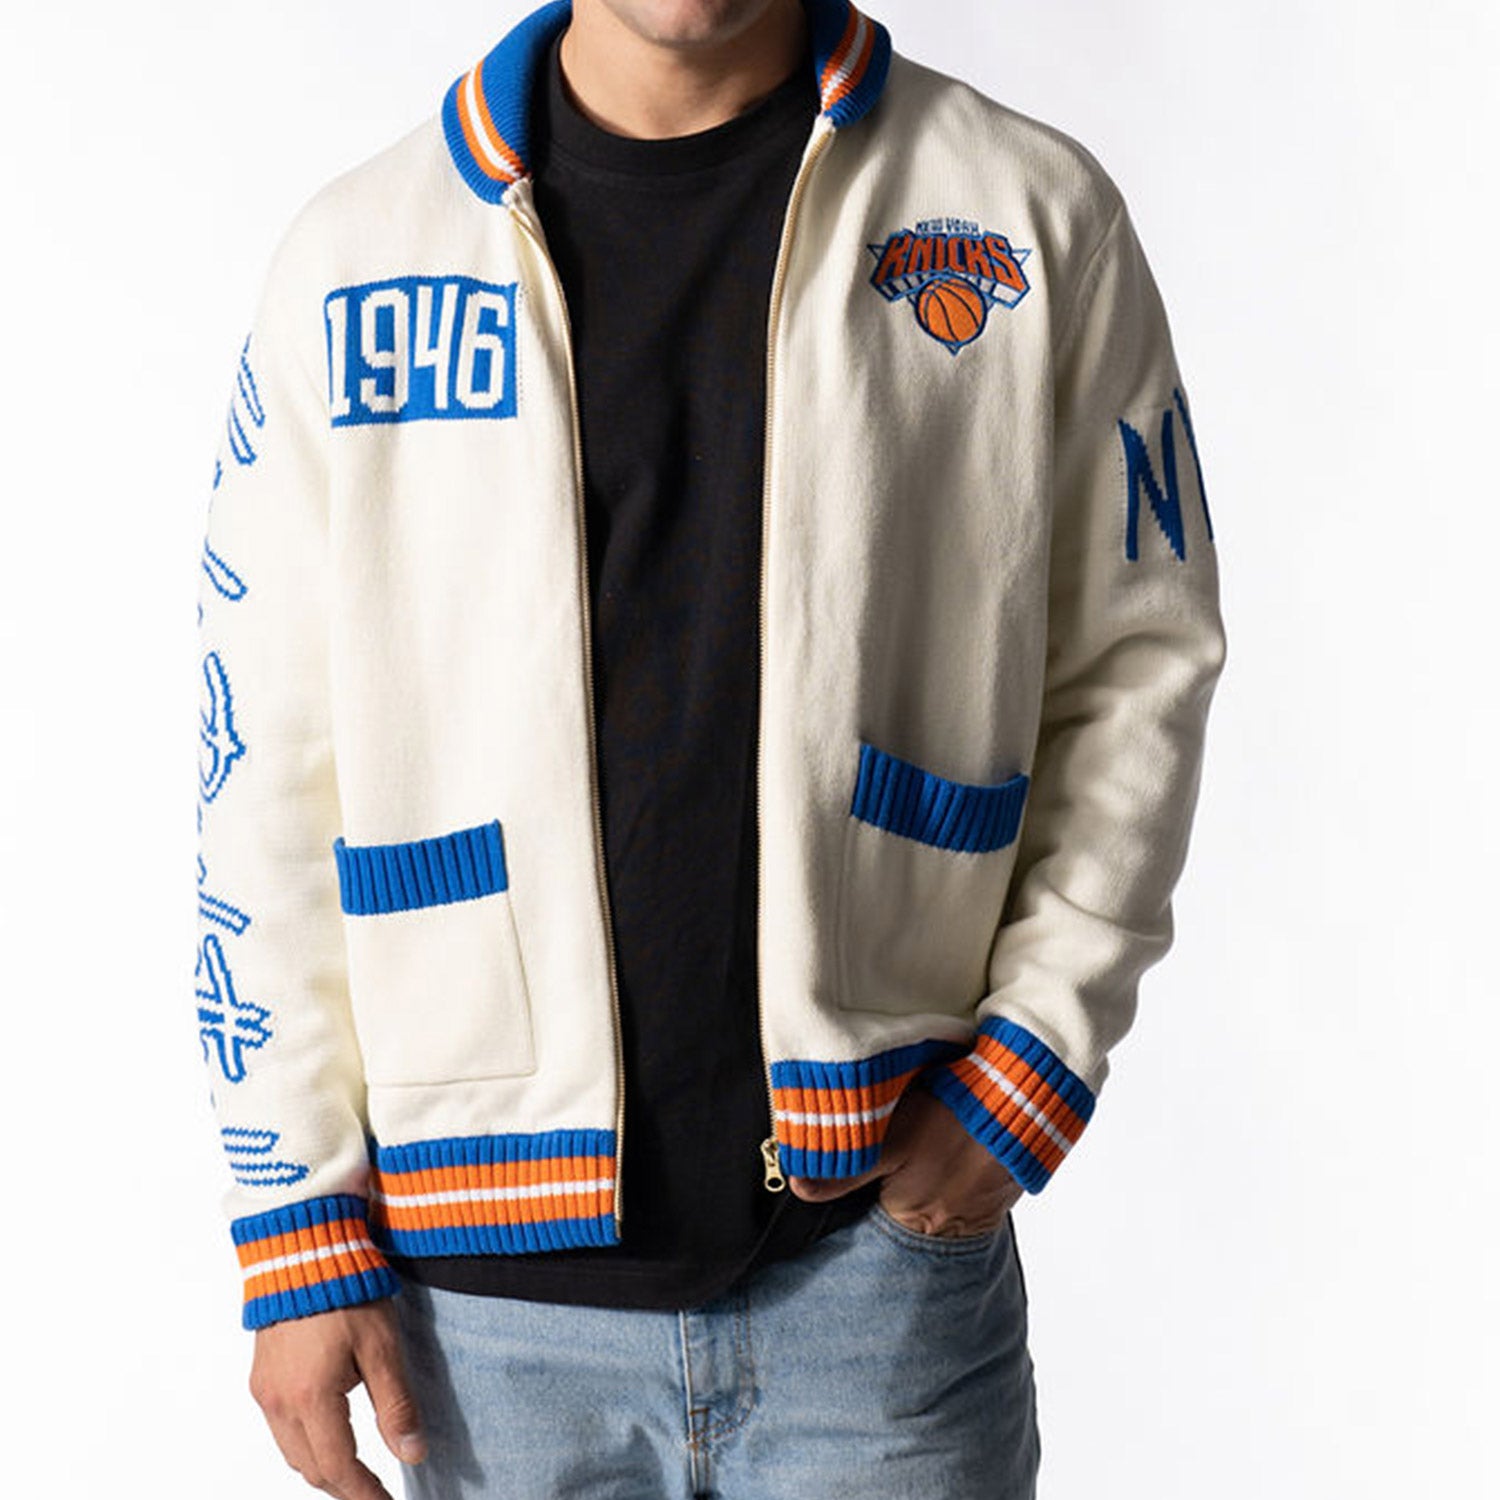 haak Vijandig Evolueren Wild Collective Knicks Jacquard Sweater | Shop Madison Square Garden